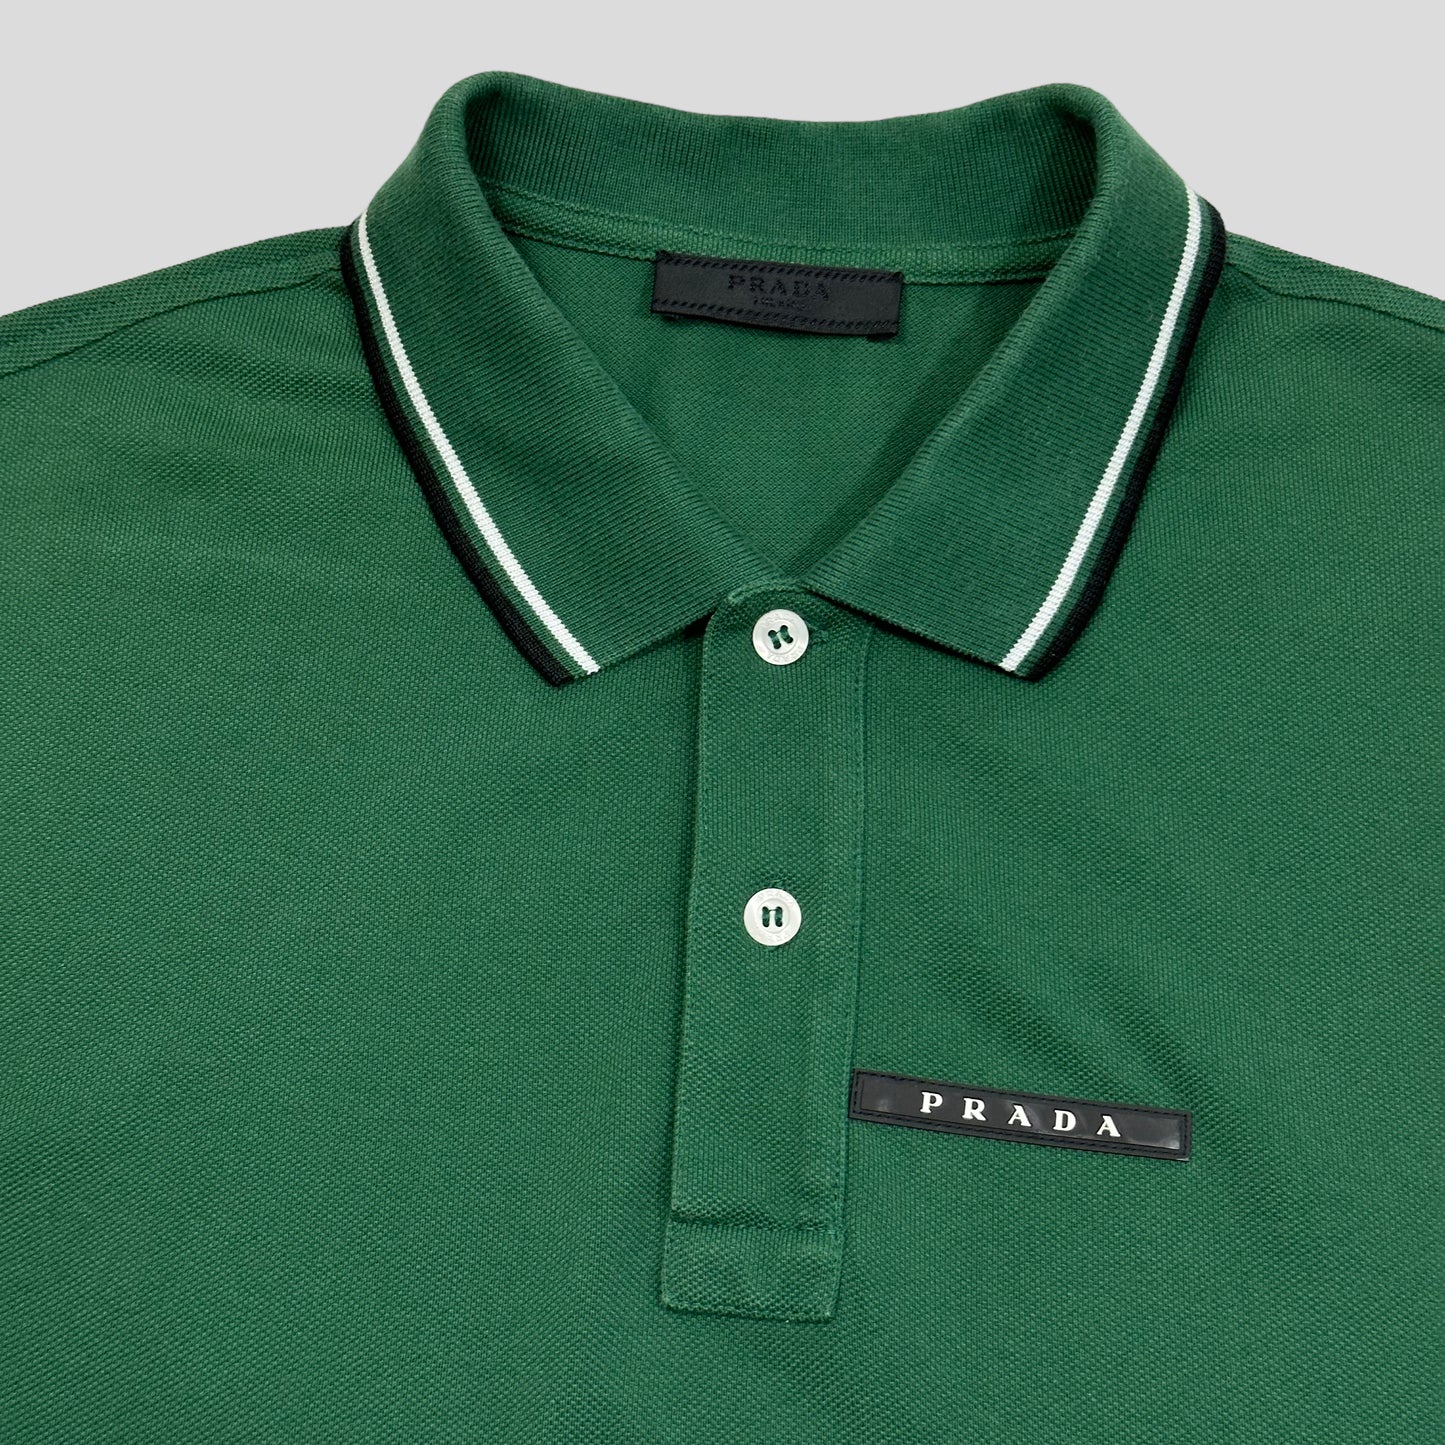 Prada Milano 2020 Forest Green Polo Shirt - L